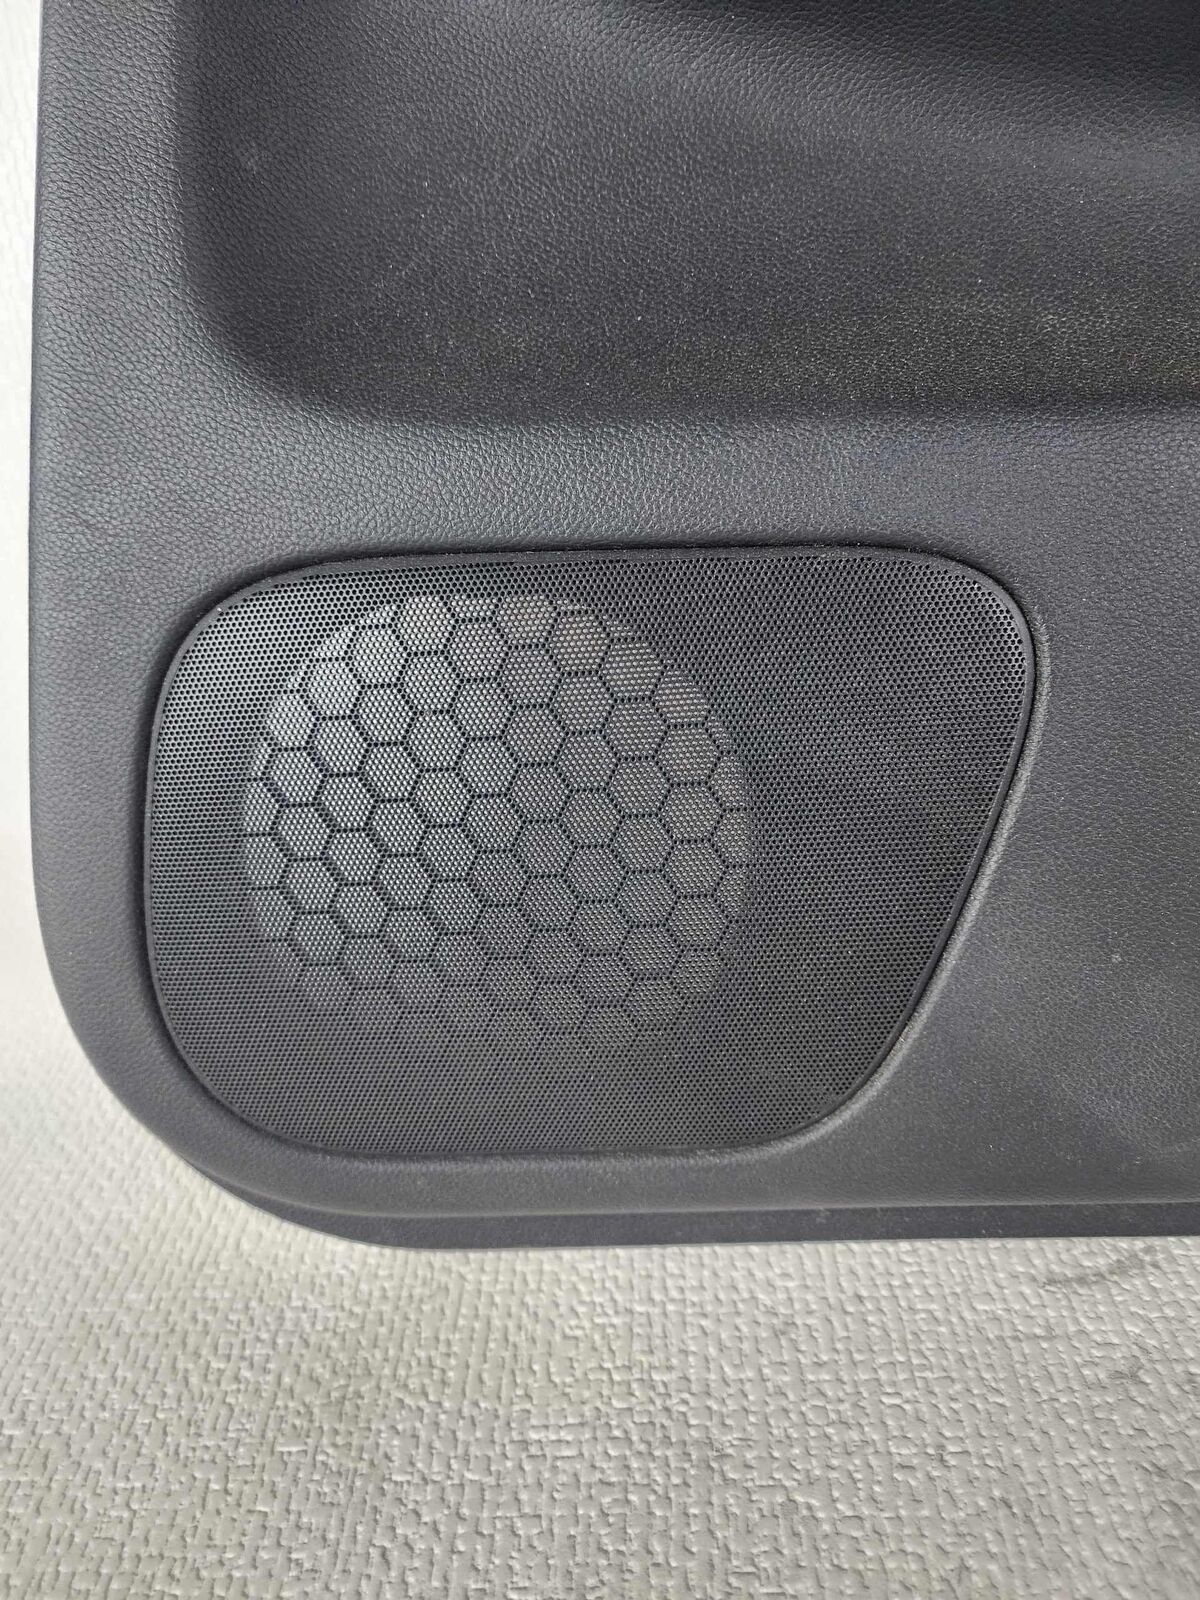 Door Interior Trim Panel Right Passenger Rear Black OEM INFINITI G37 12 2013